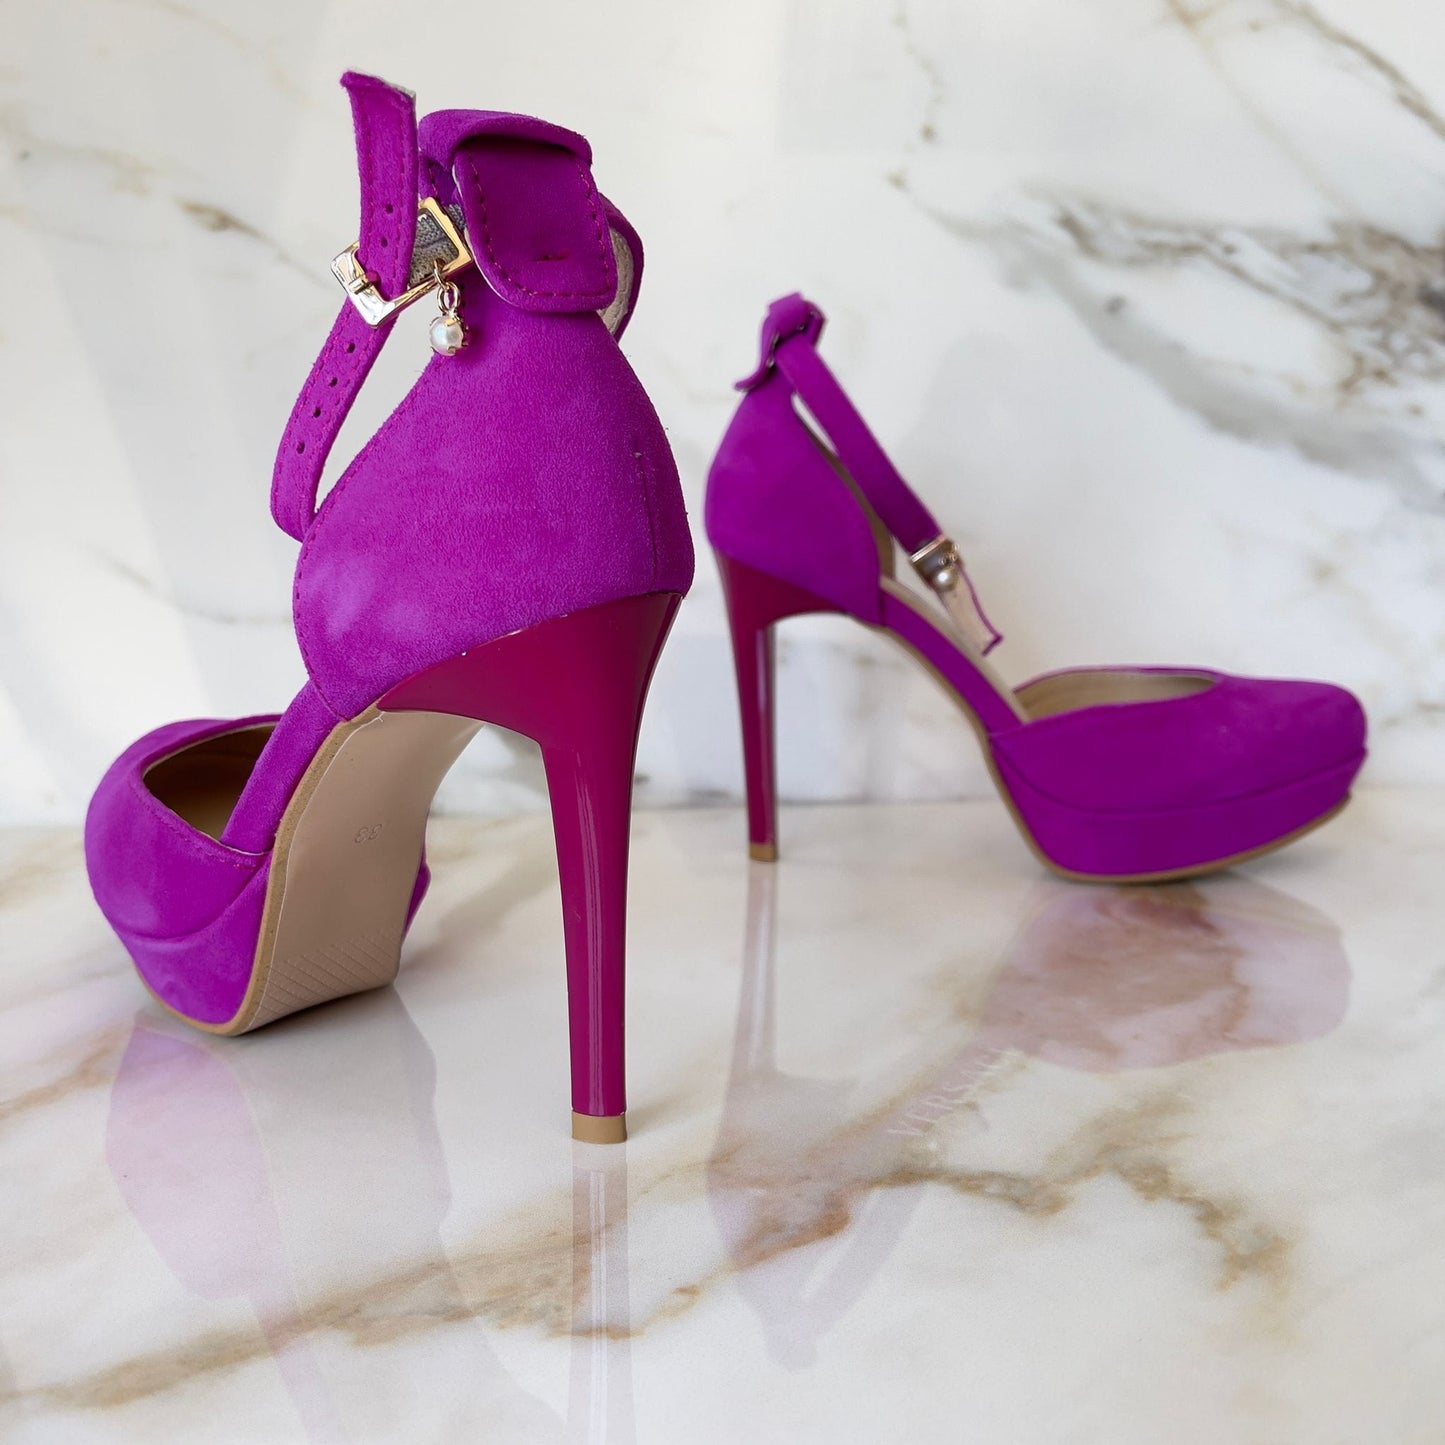 High heel platform sandals in pink suede leather